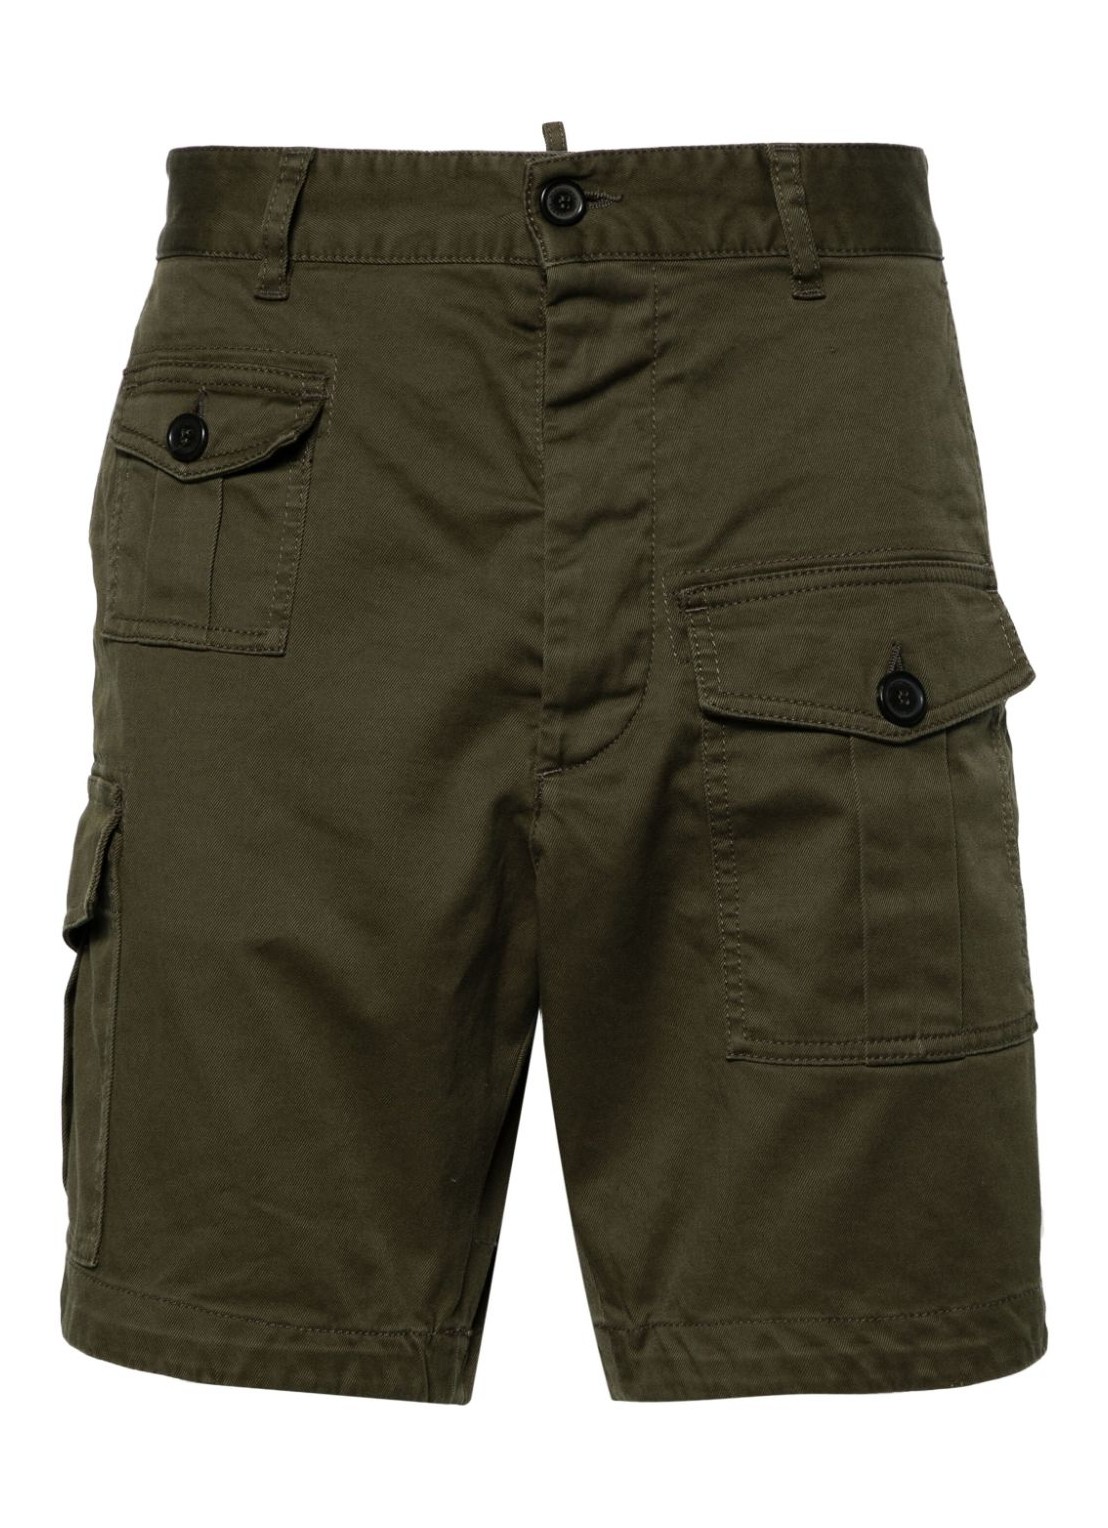 Pantalon corto dsquared short pant man sexy cargo shorts s74mu0780s39021 695 talla 46
 